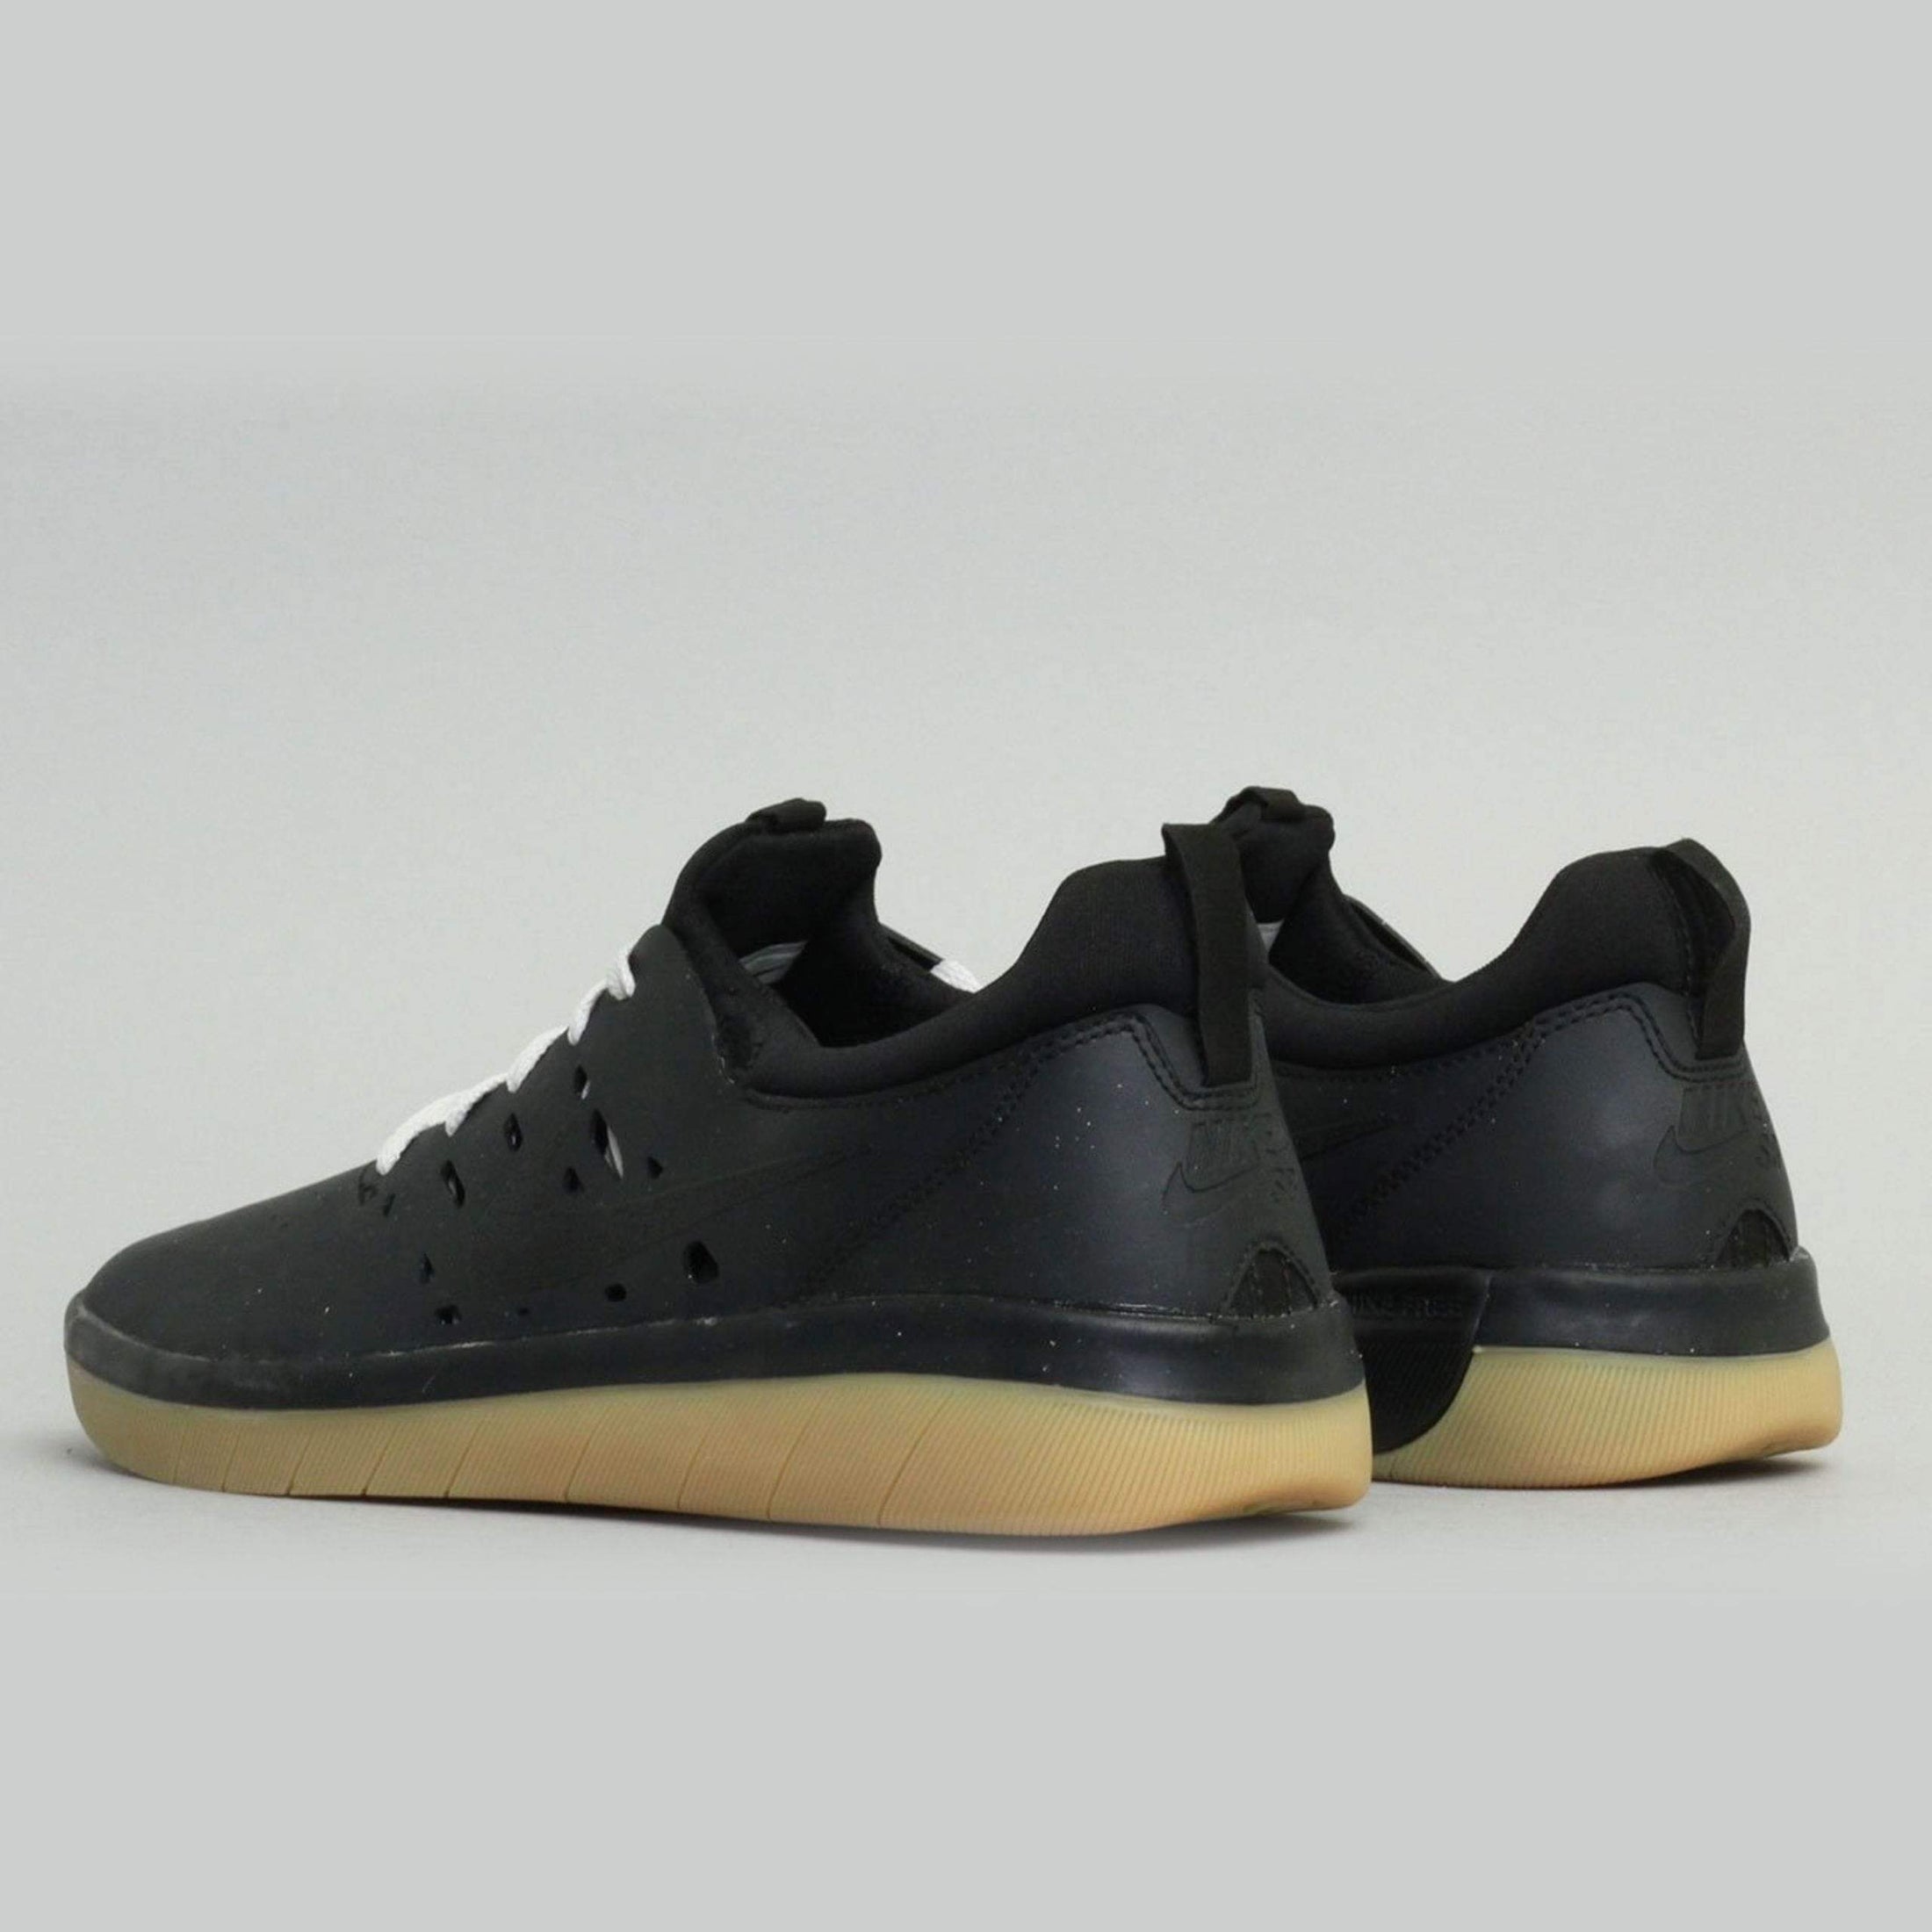 Nike SB Nyjah Free Shoes Black / Black - Gum Light Brown